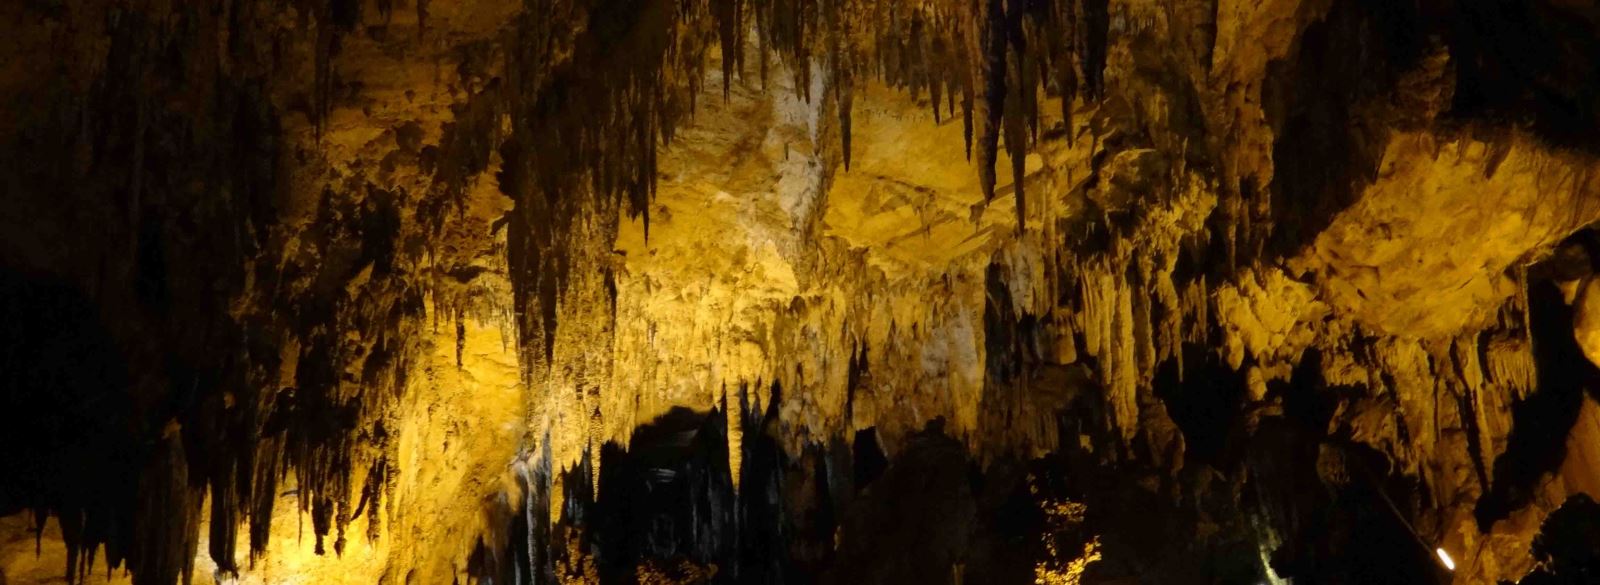 Visiter la grotte de Nguom Ngao